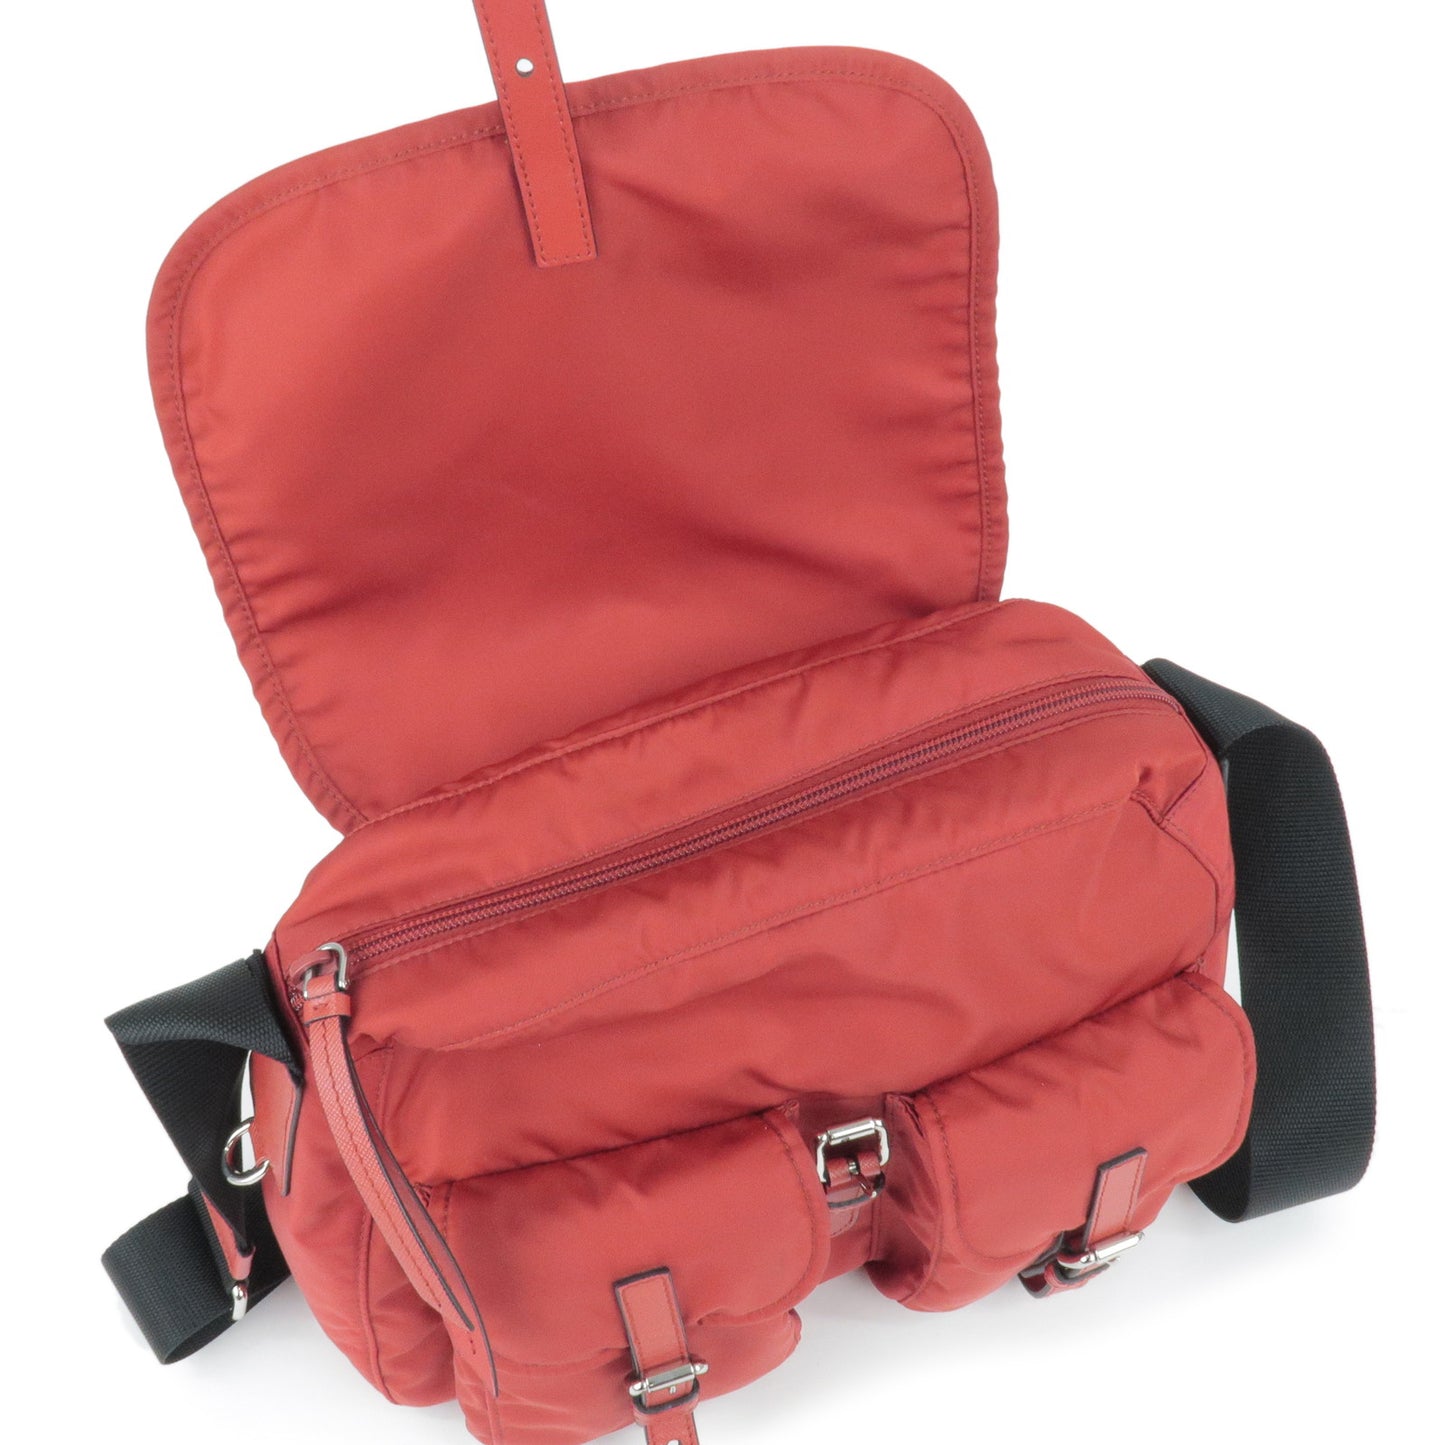 PRADA Logo Nylon Leather Shoulder Bag FUOCO Red 1BD225